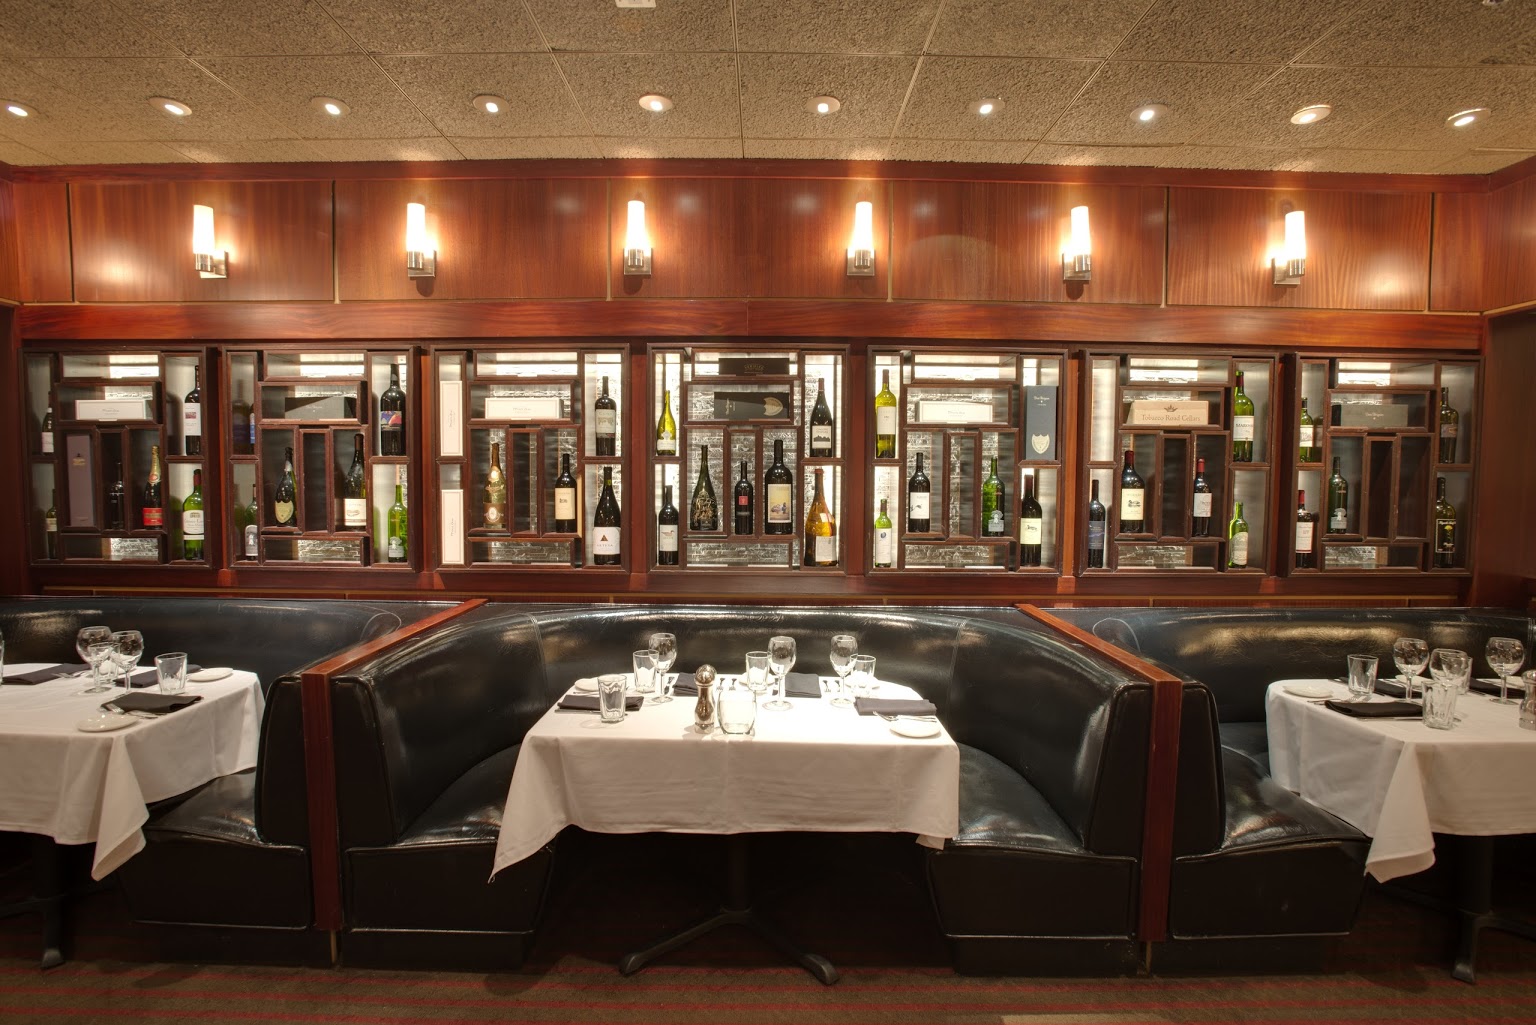 Sullivan's Steakhouse Raleigh, NC Steak House Restauarant booth seating